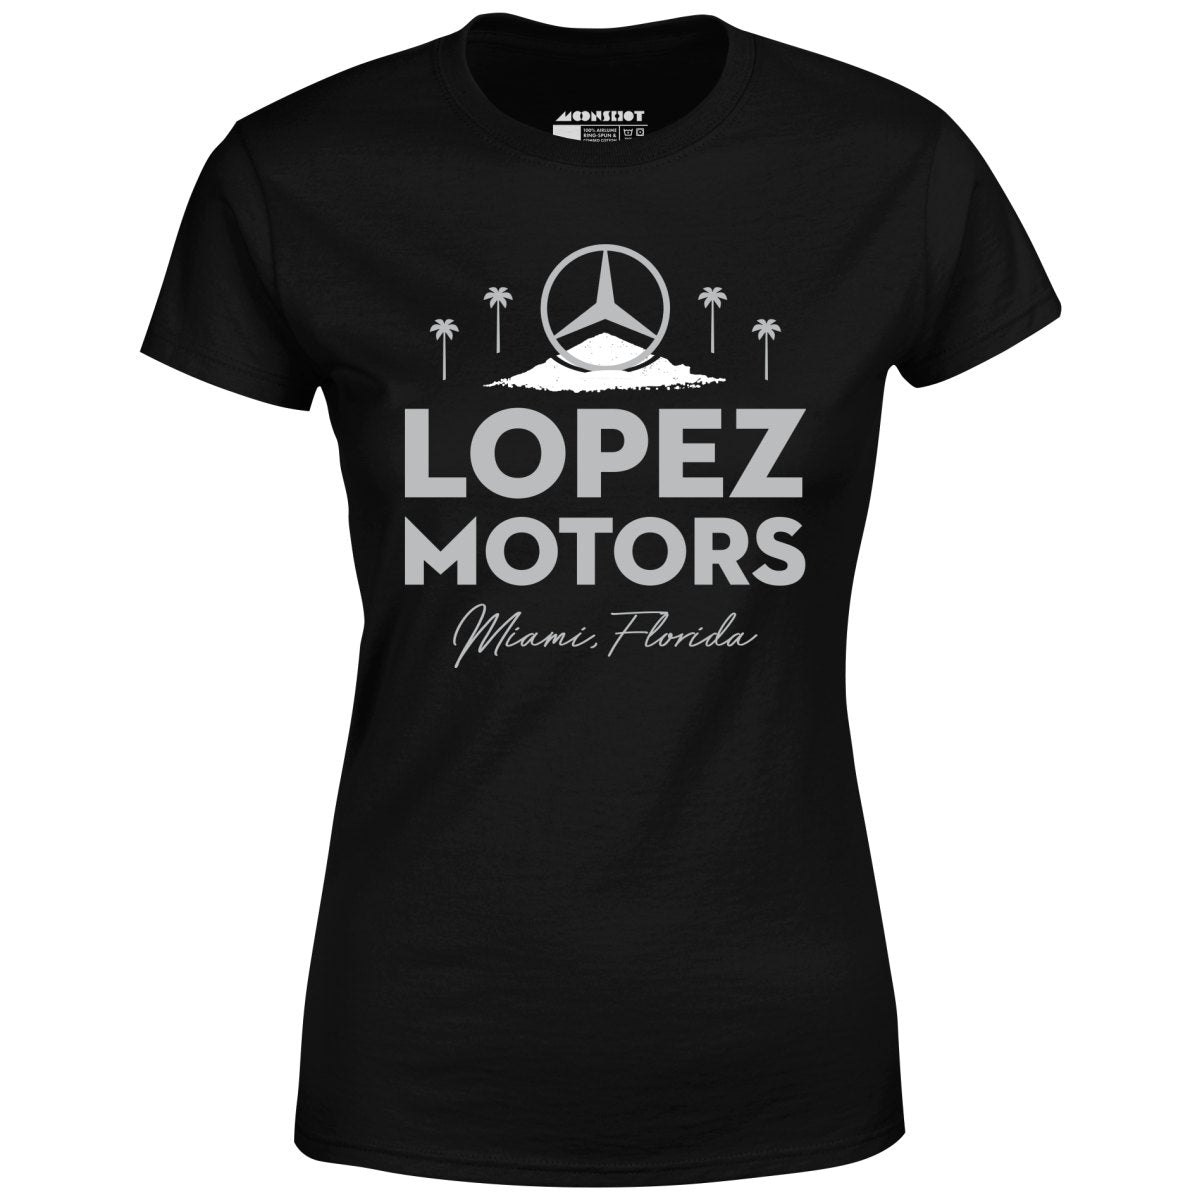 Lopez Motors - Women's T-Shirt